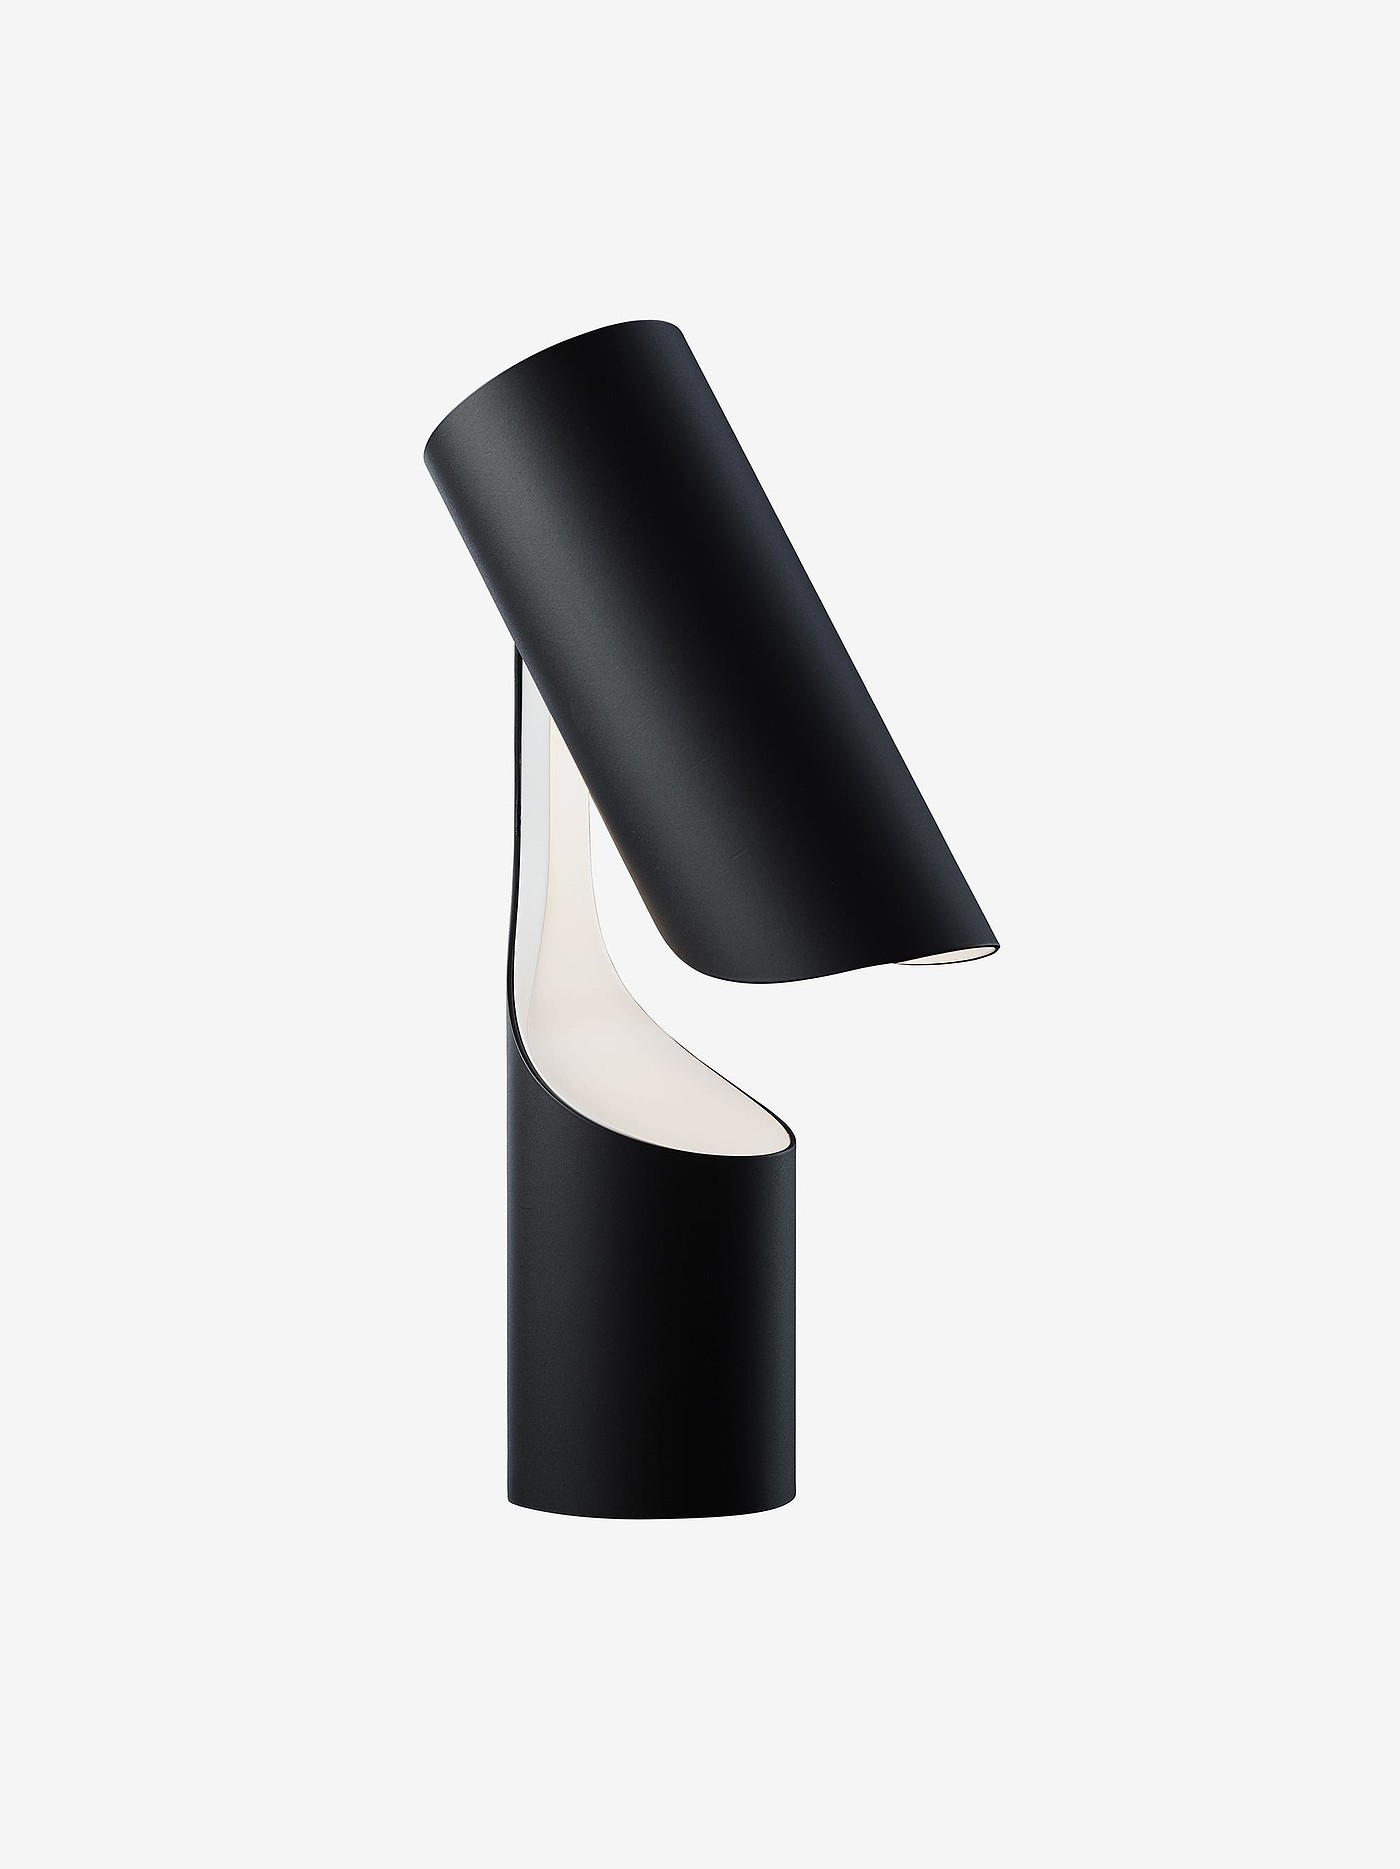 Mutatio Lamp，灯饰，照明，黑色，极简，Christian Troels，